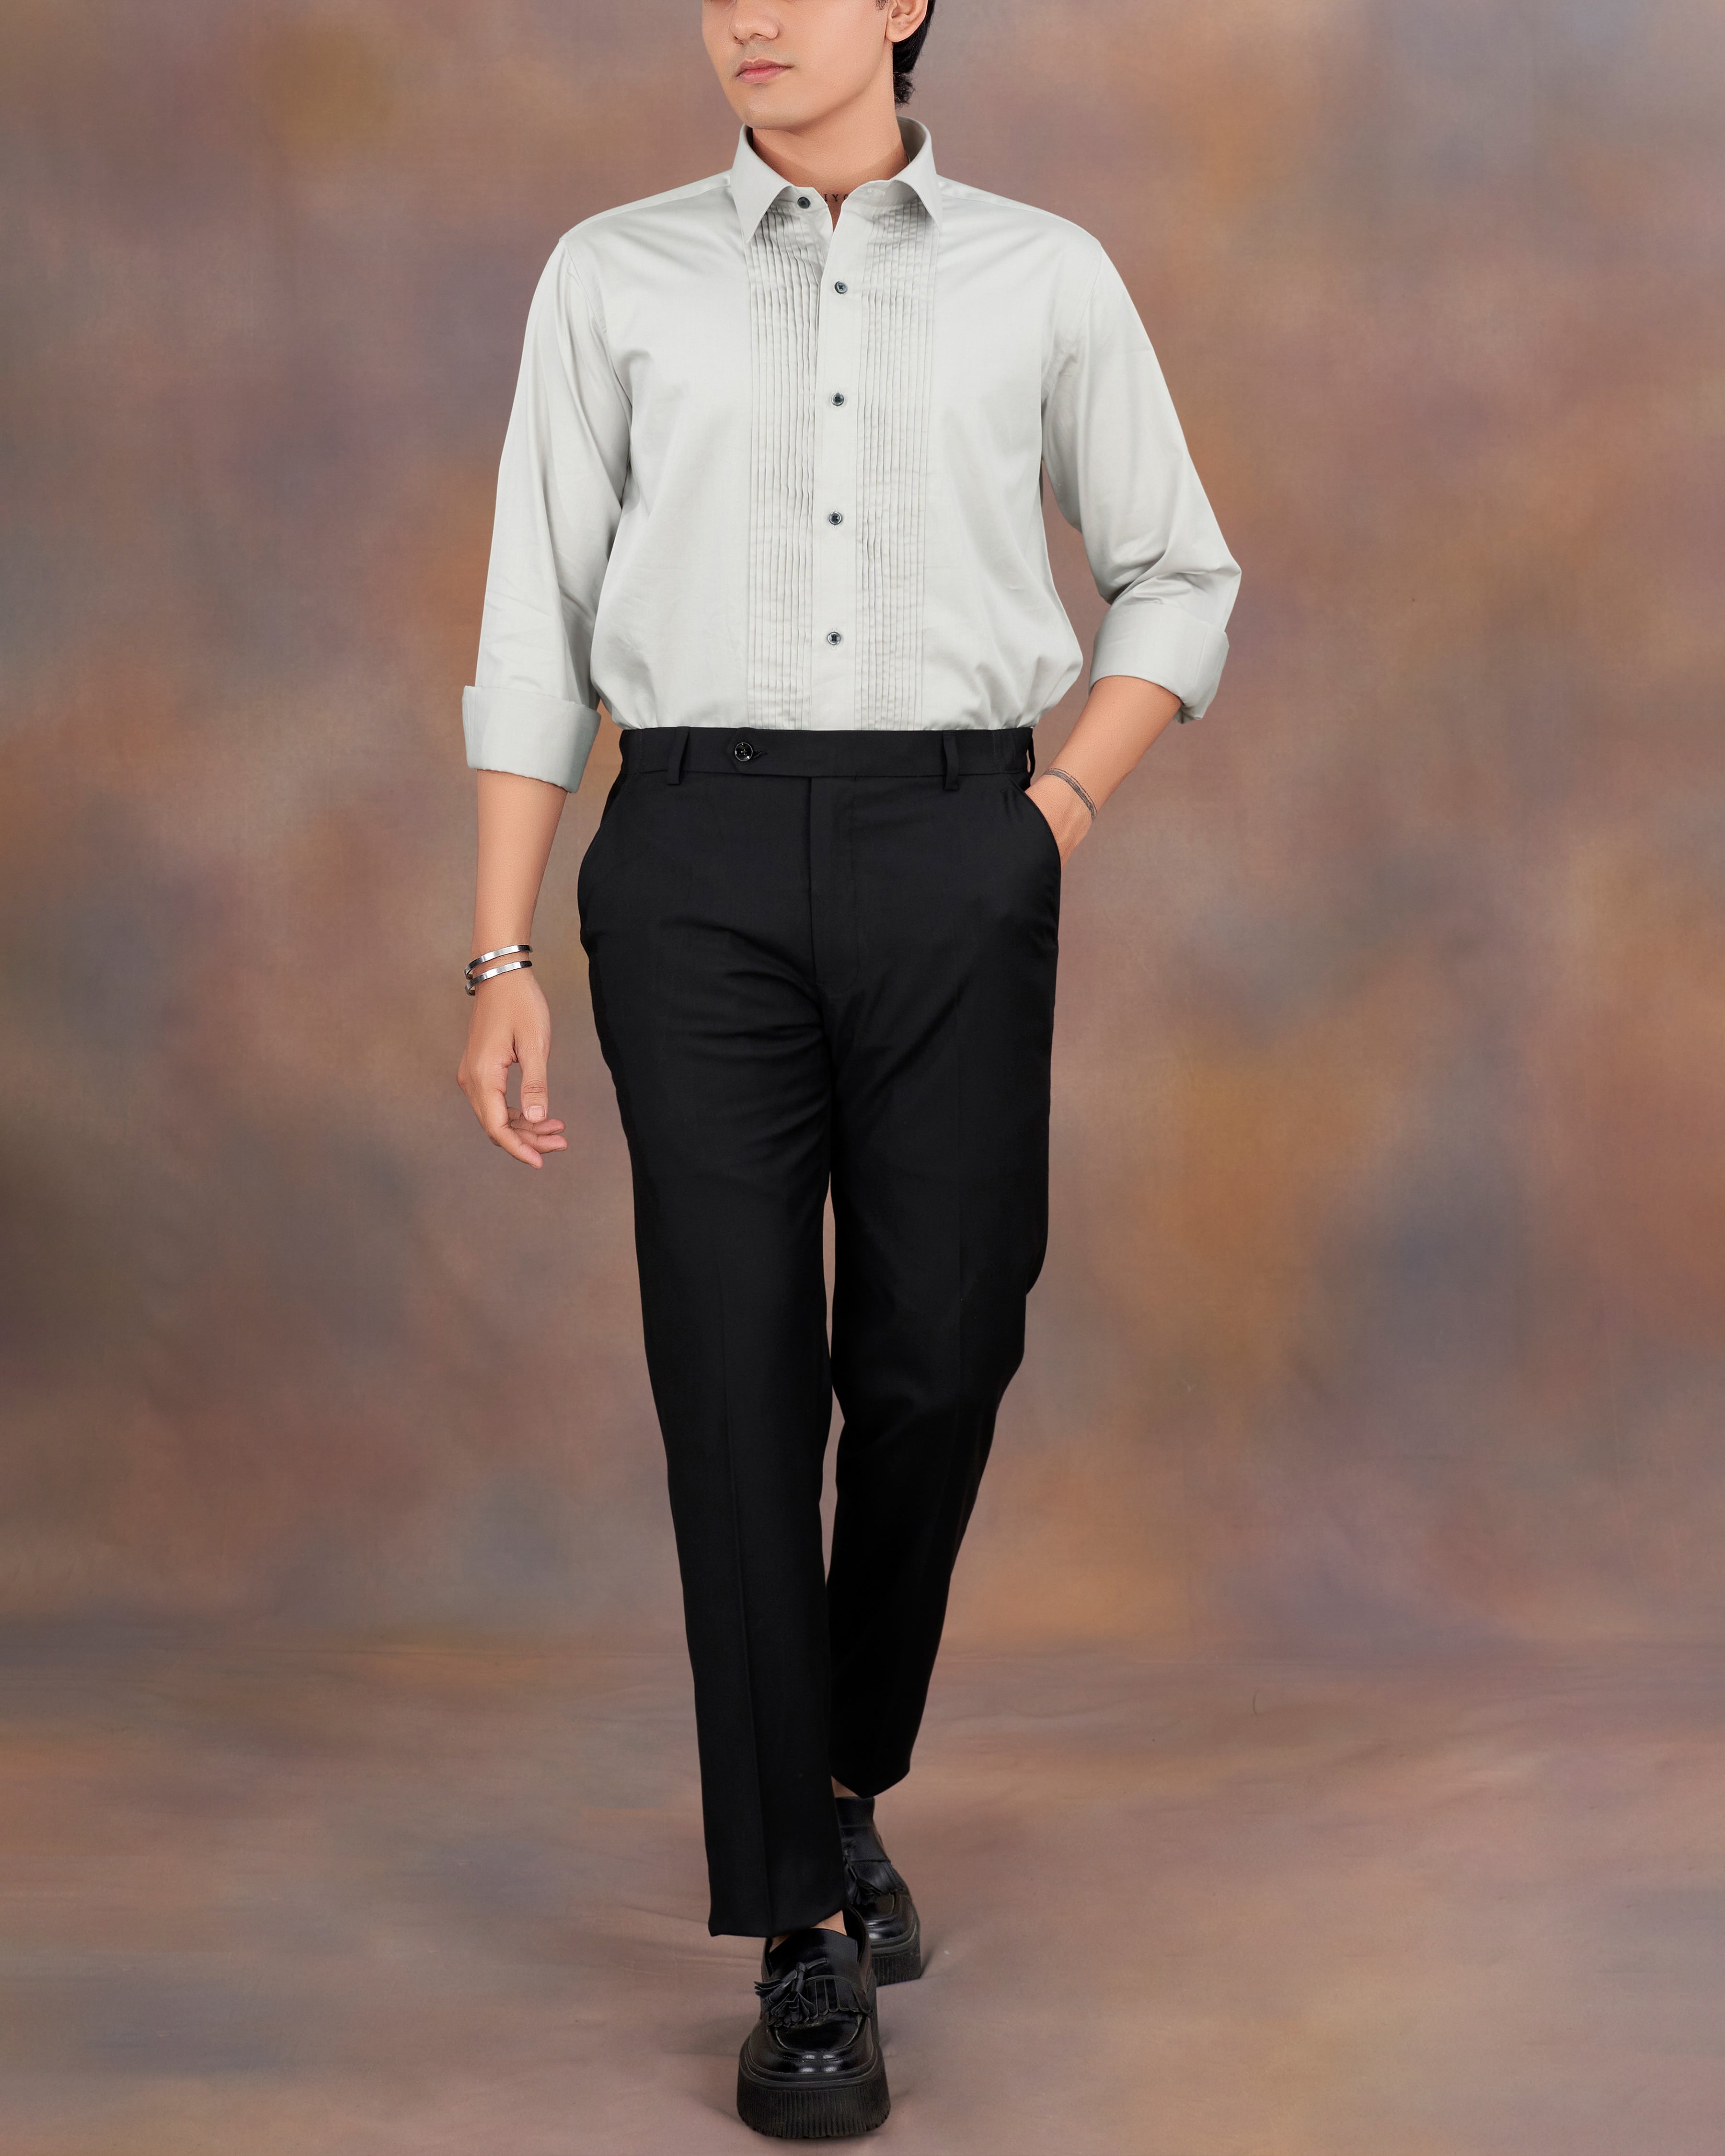 Celeste Grey Subtle Sheen Snake Pleated Super Soft Premium Cotton Tuxedo Shirt